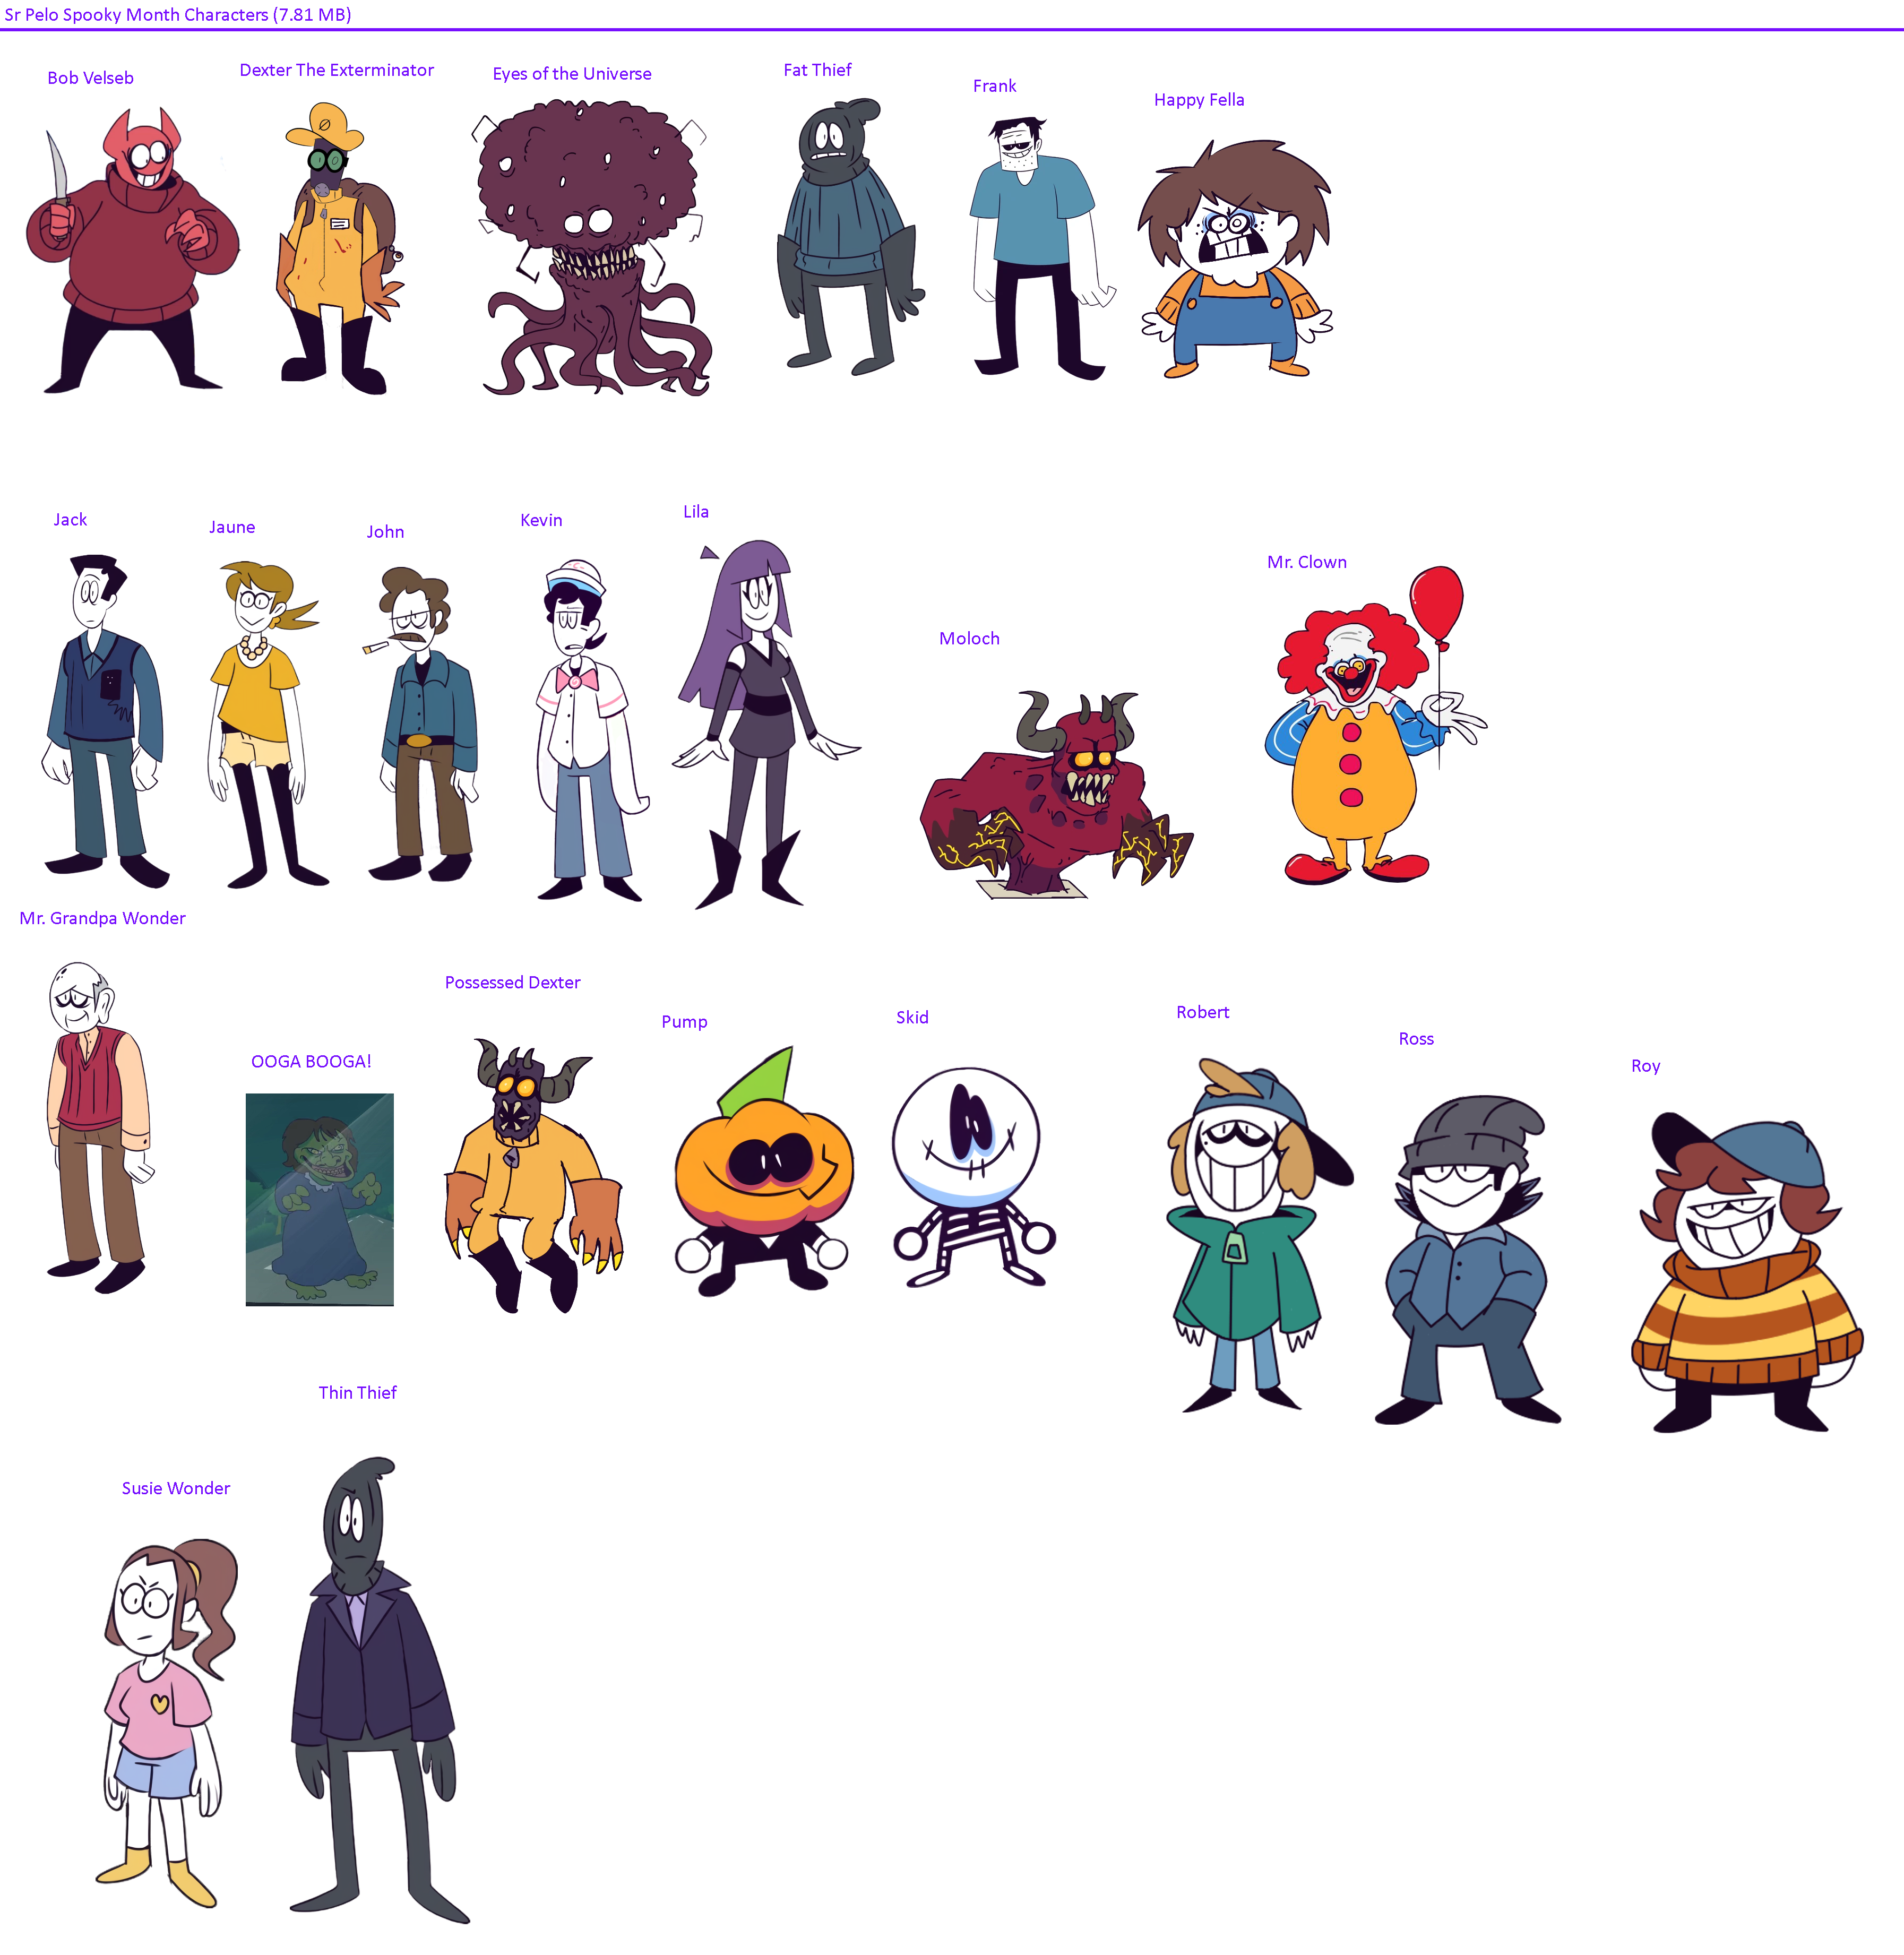 Sr Pelo Spooky Month Characters (7.81 MB) by Abbysek on DeviantArt